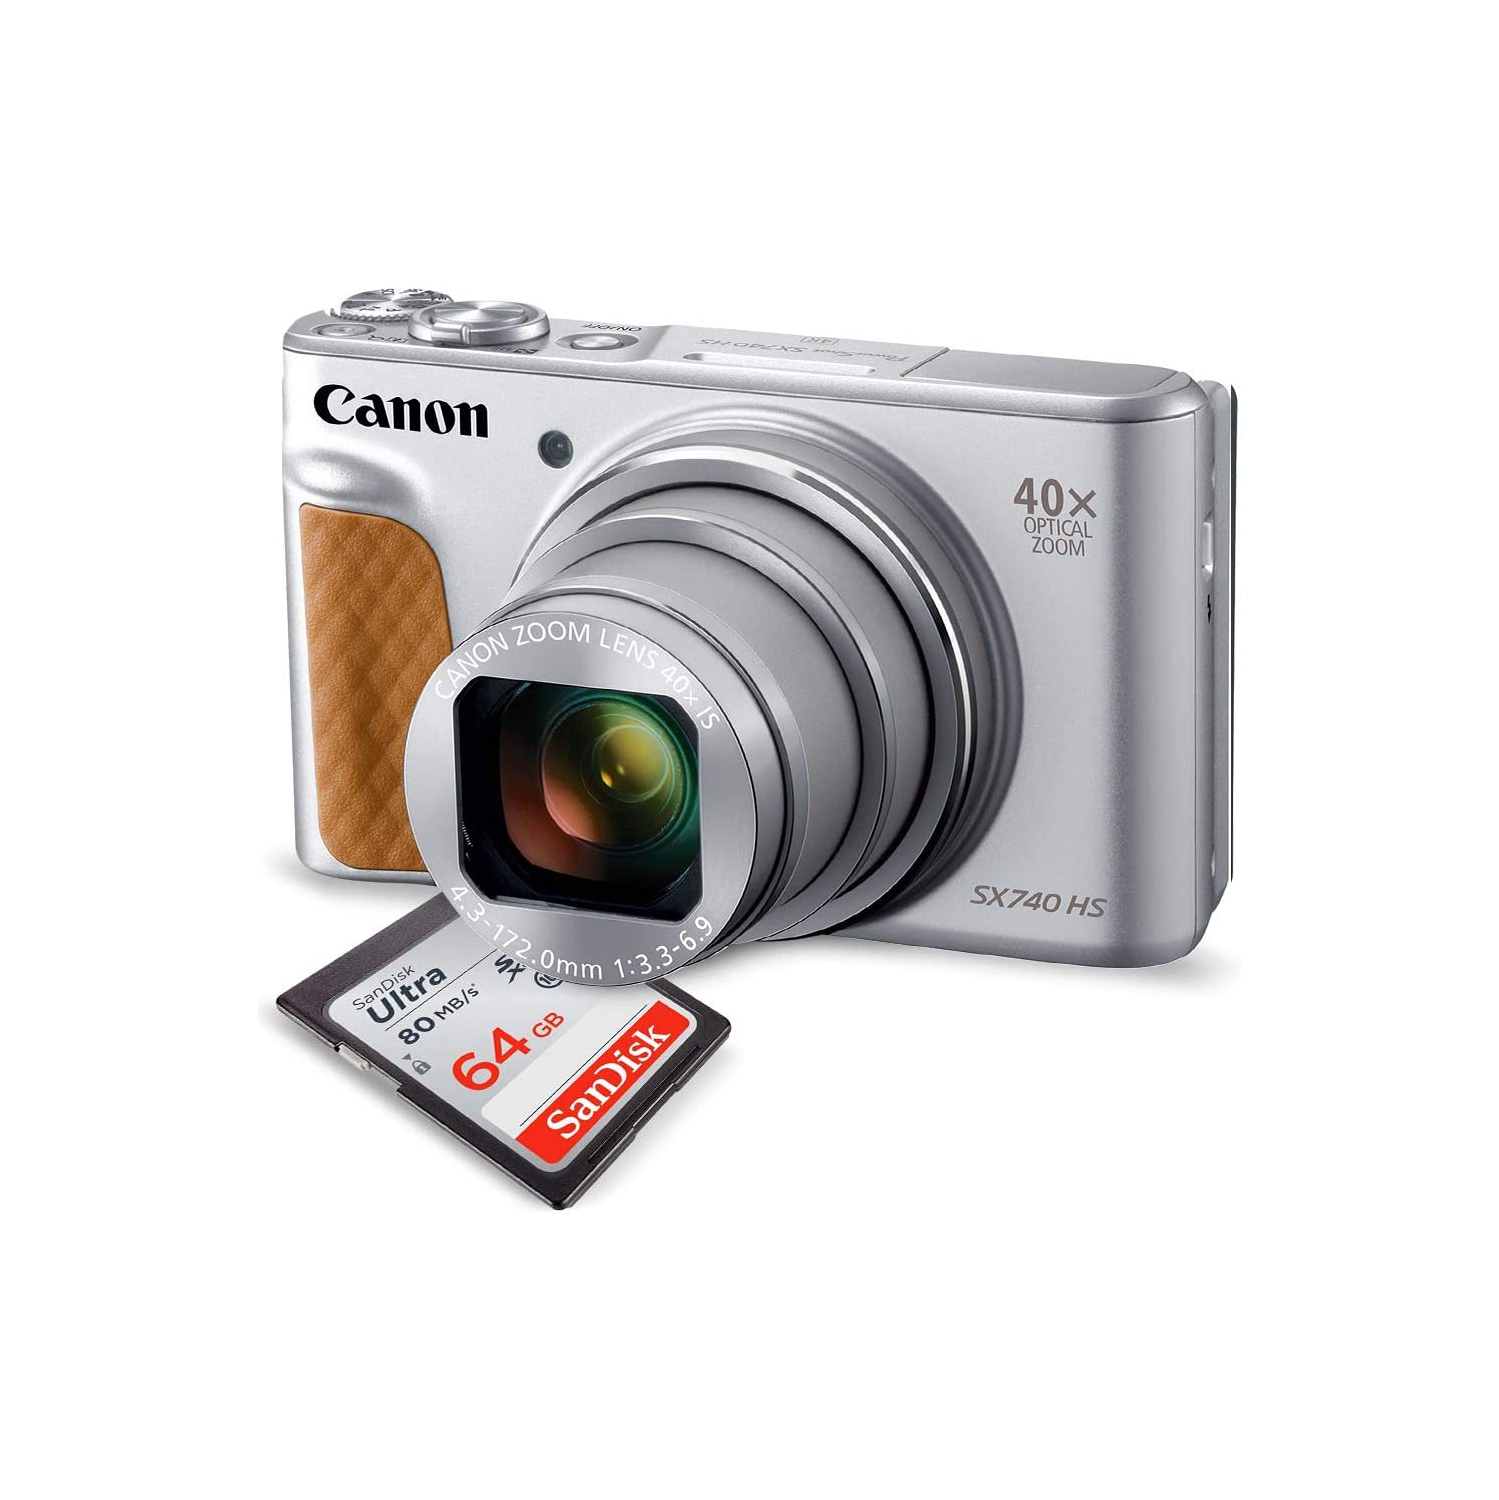 Canon PowerShot SX740 HS Digital Camera (Silver) with 64GB Card, International Version